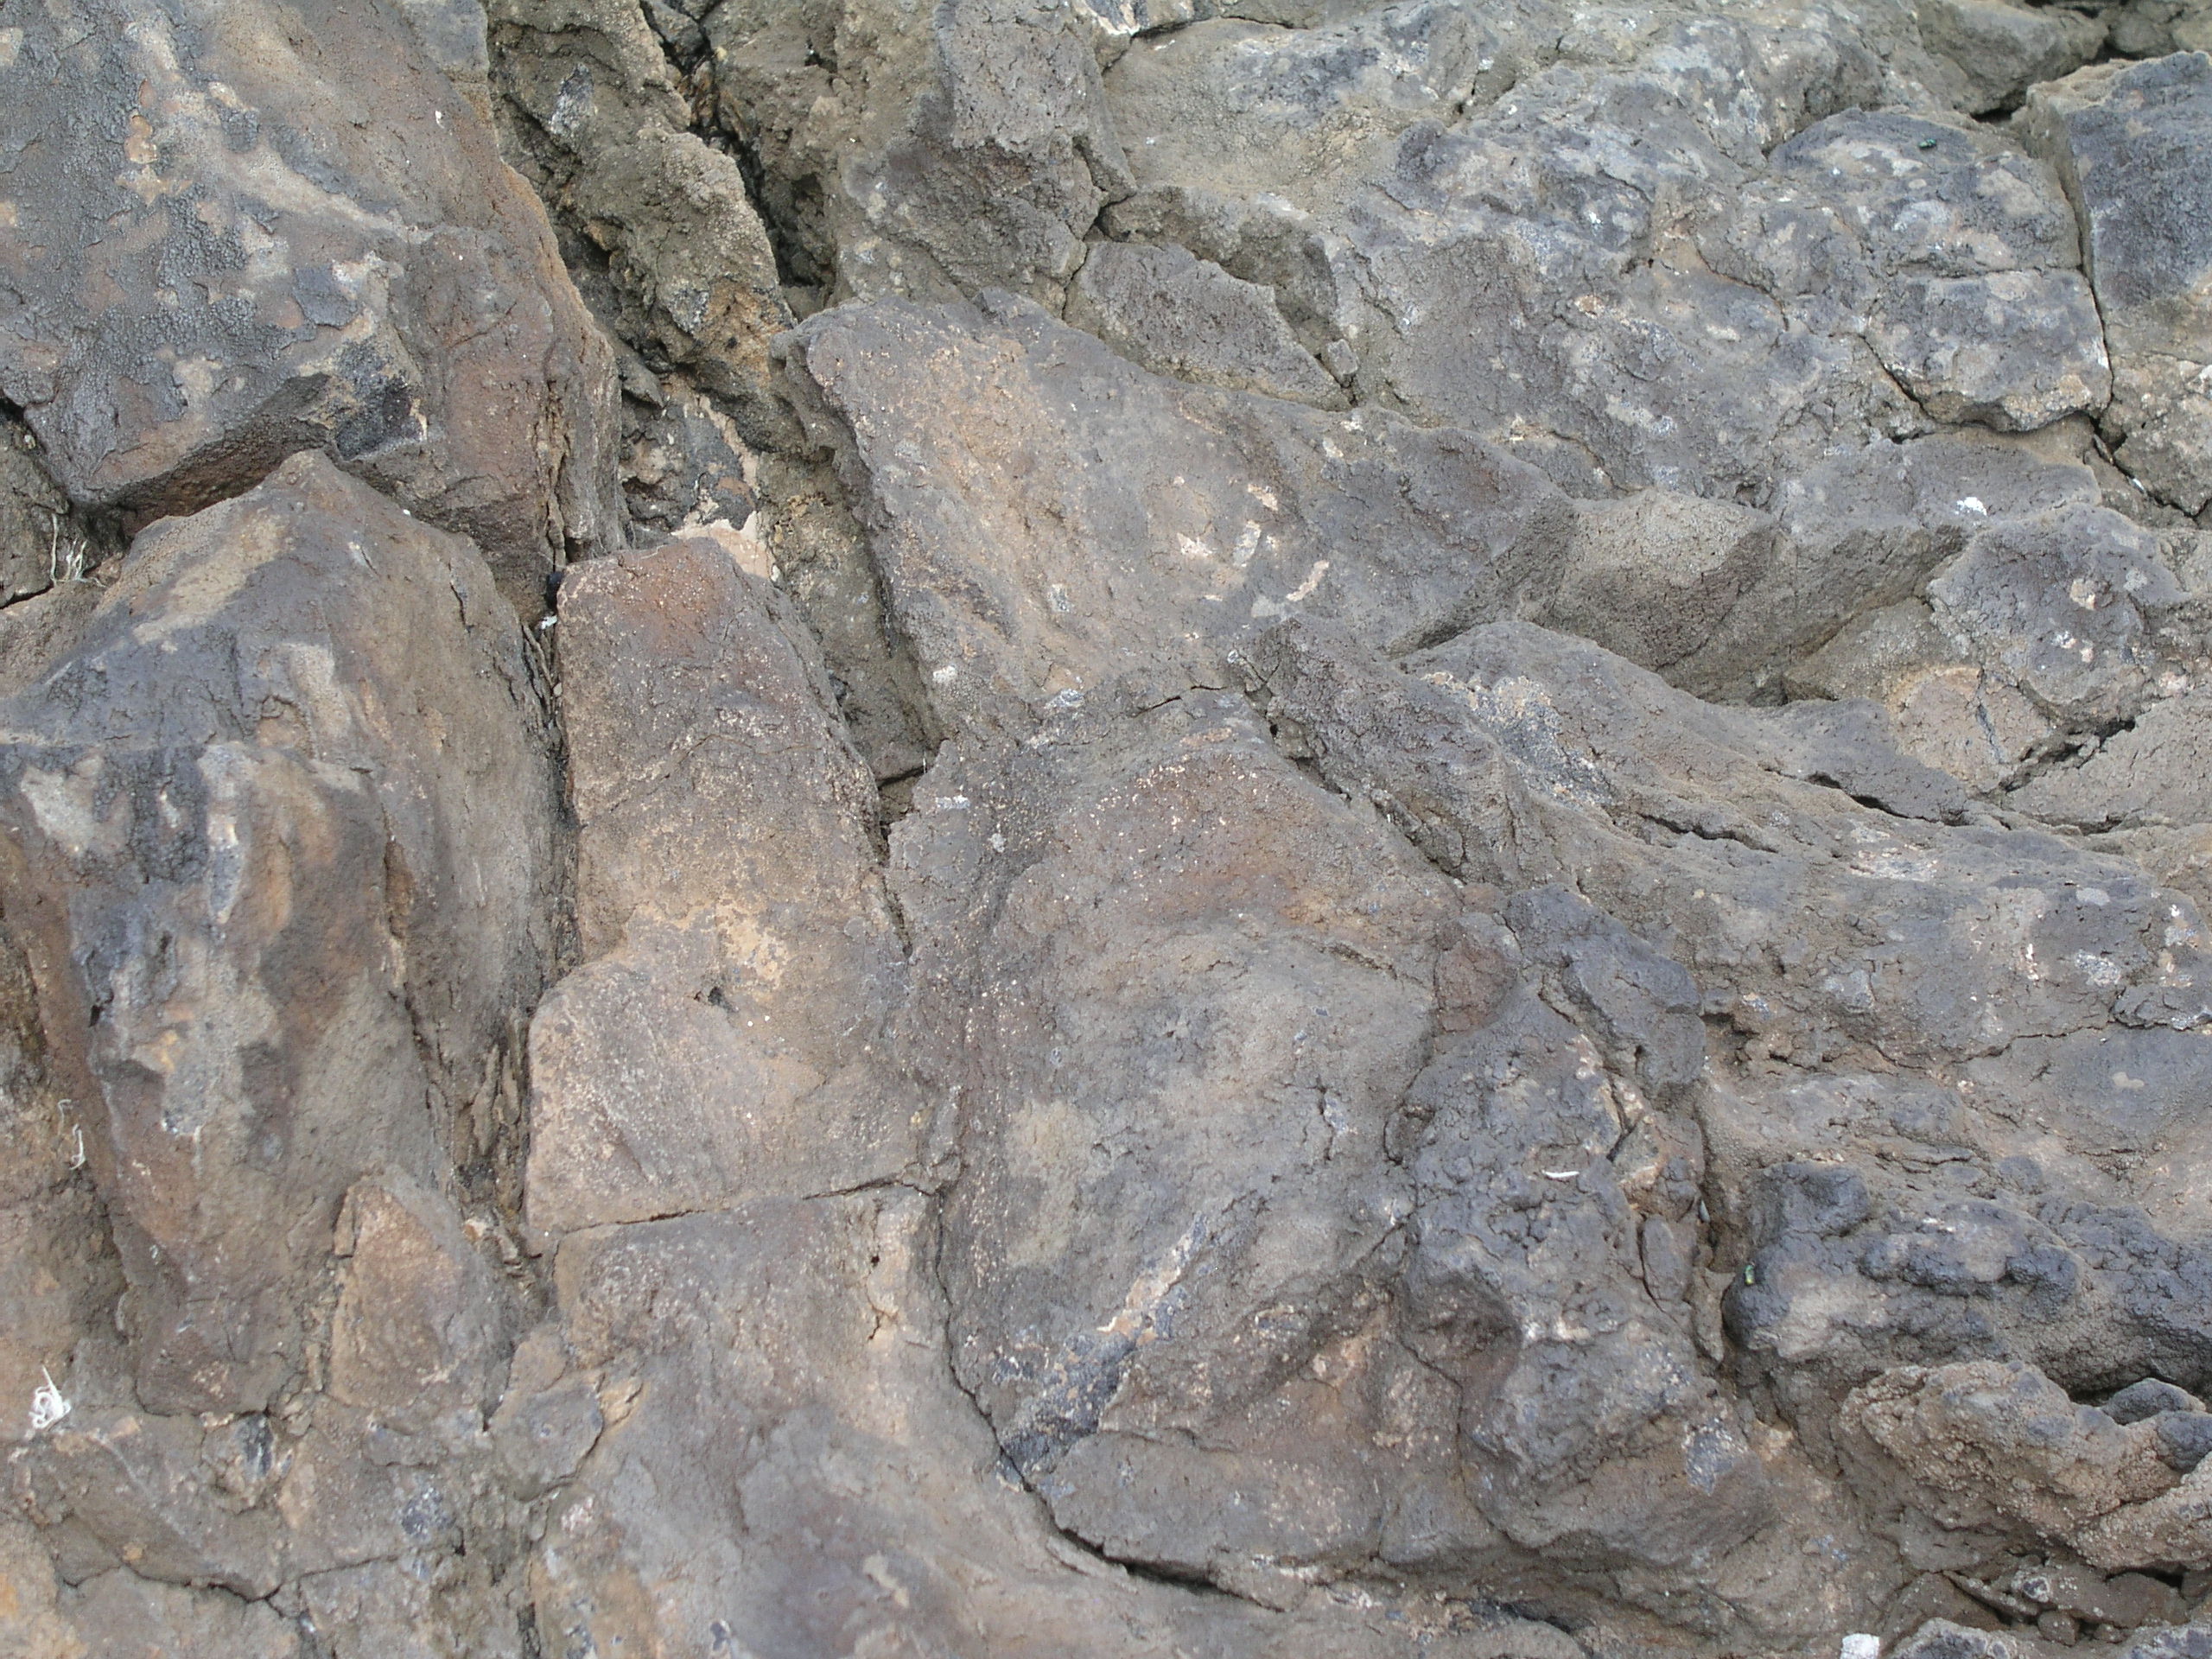 High Quality Layerd Volcanic Rock Surface Textures - Rock Surface ...